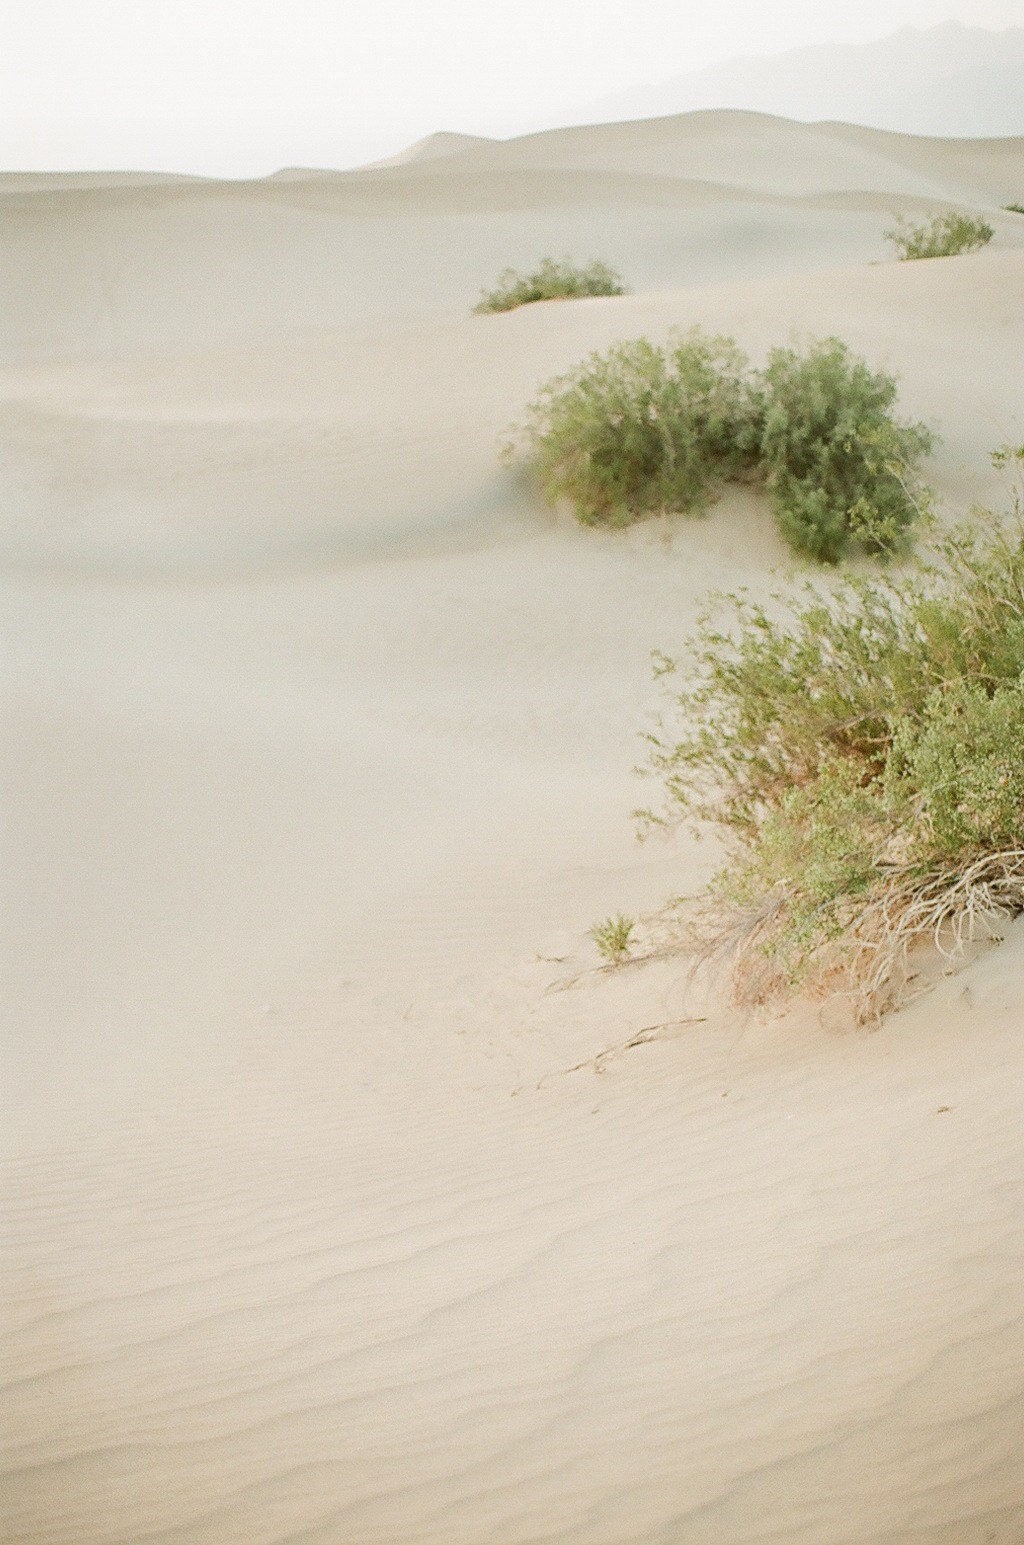 Scenes from Mesquite Sand Dunes - Entouriste